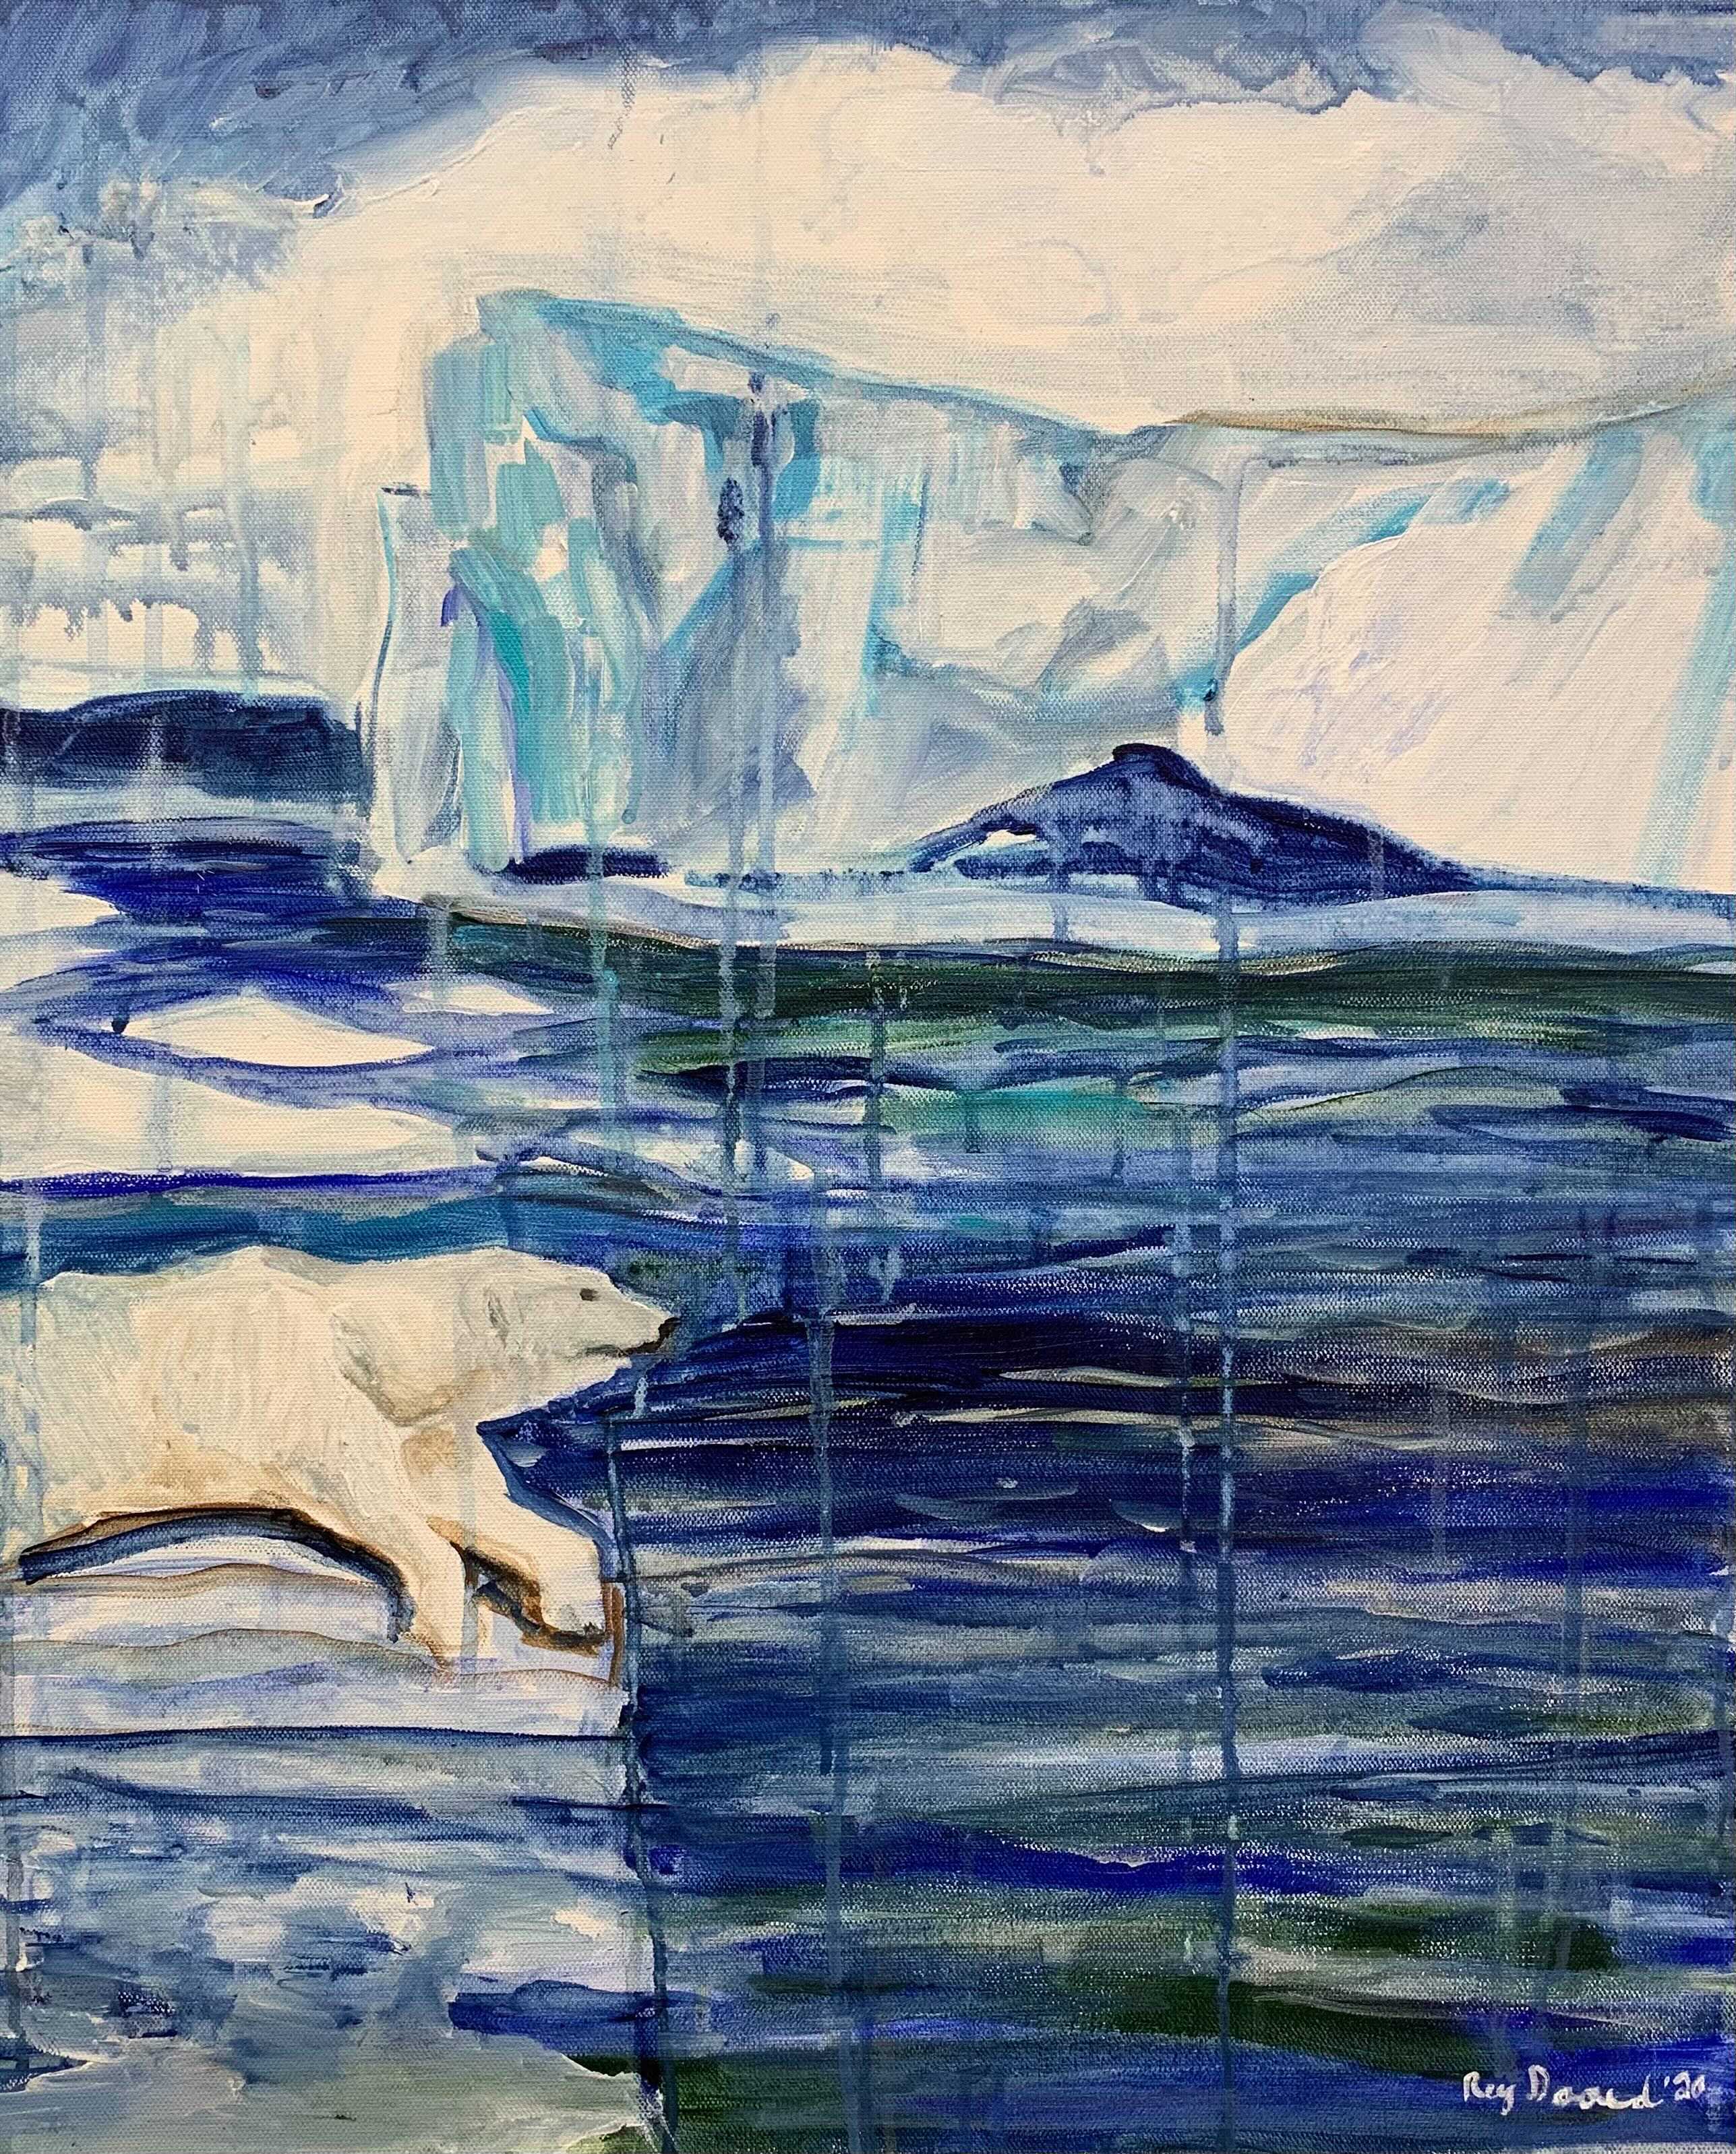 Rey Daoed - The Polar Bear